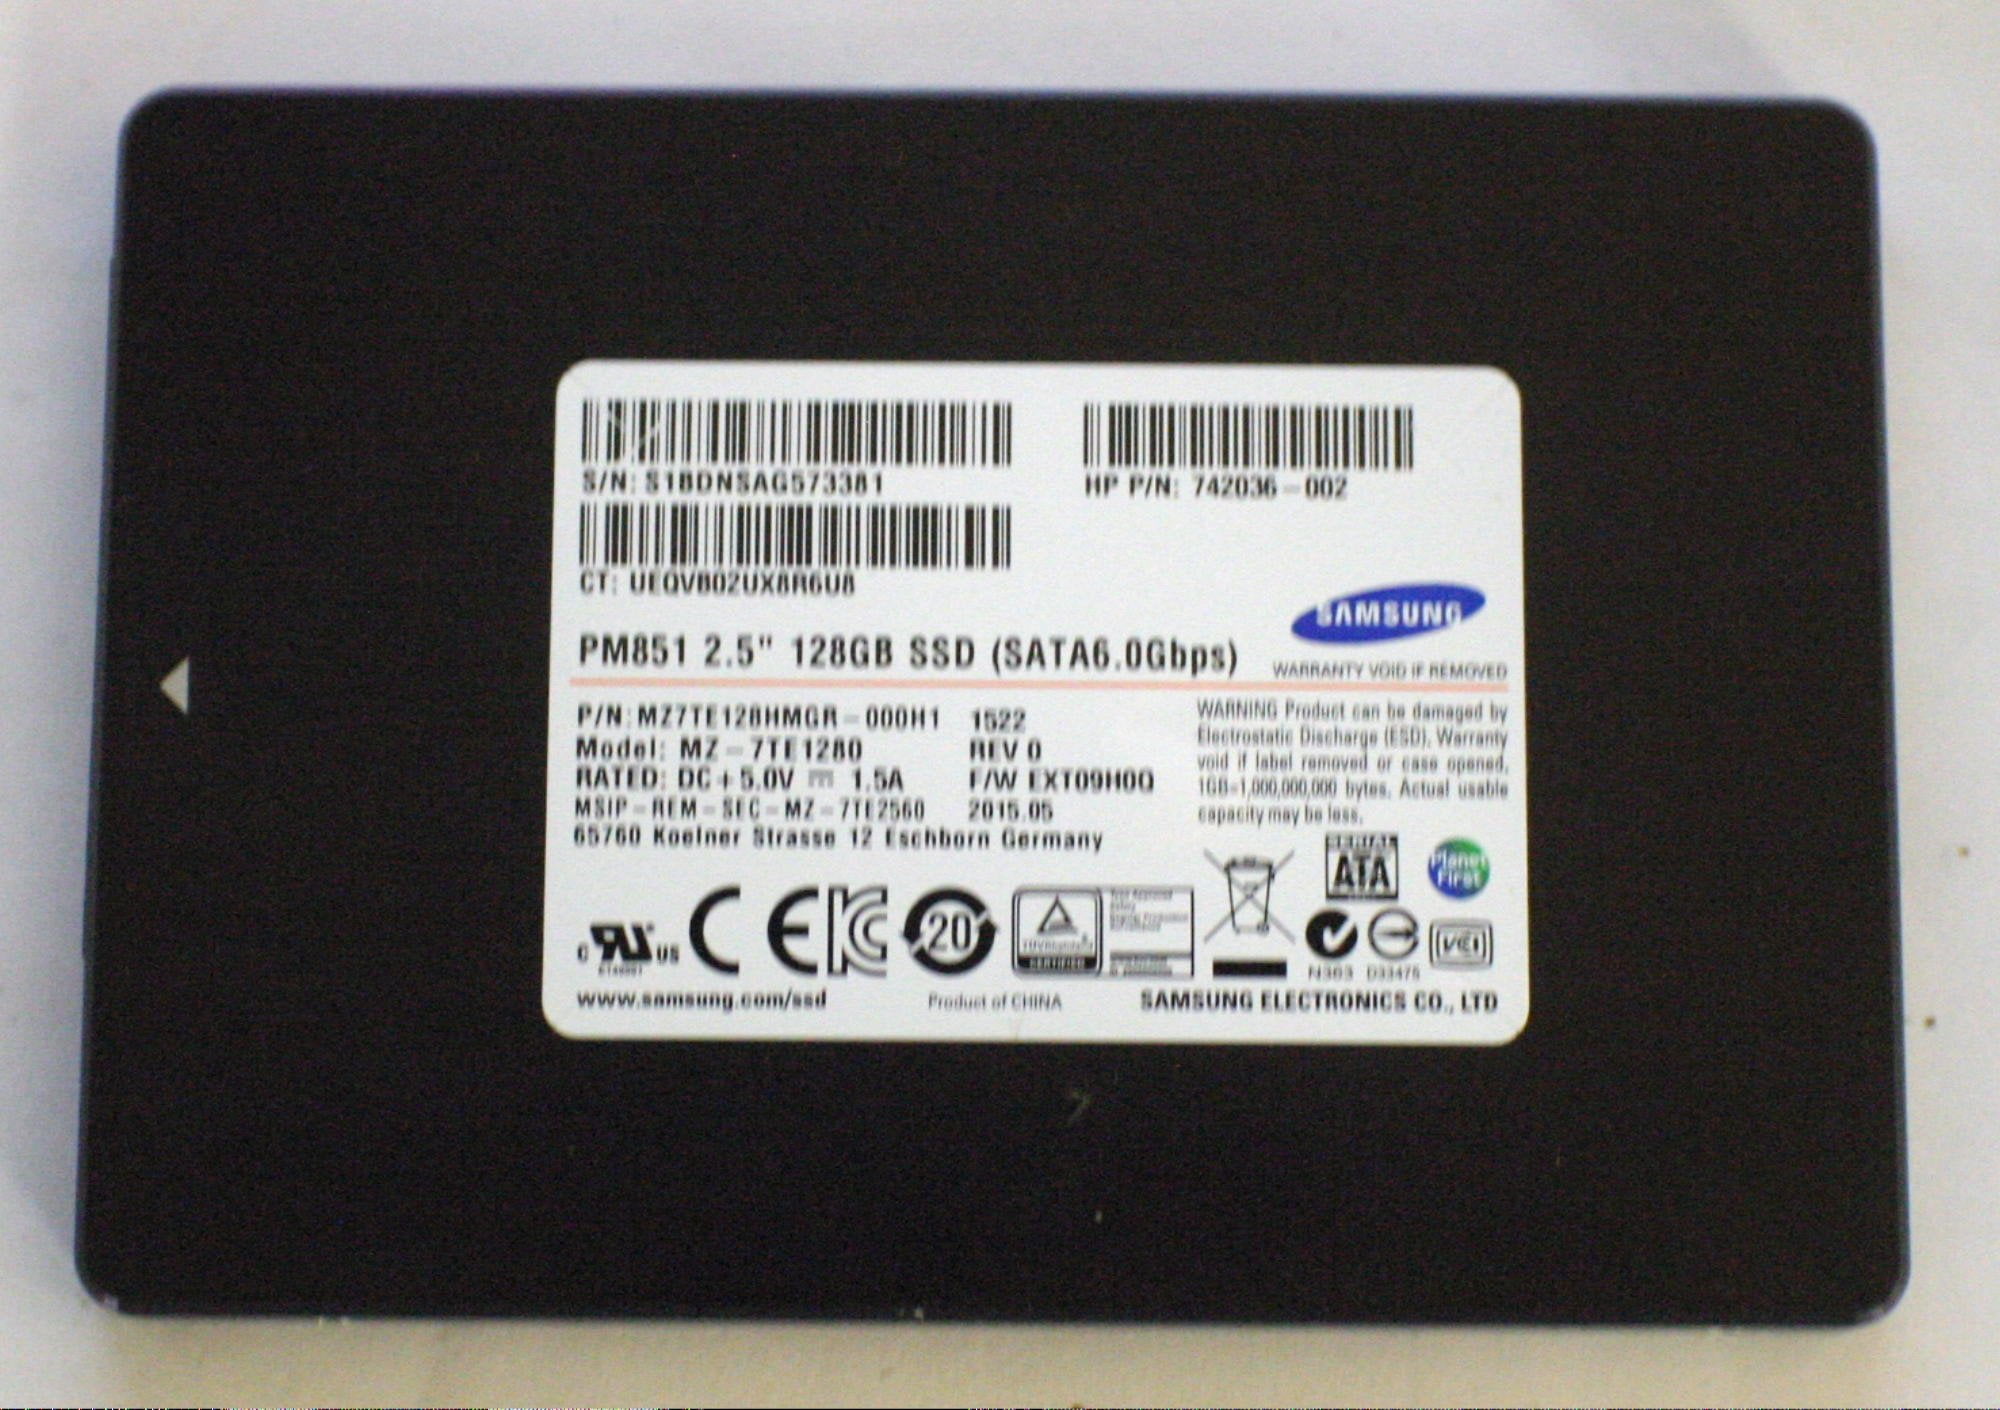 SAMSUNG 128GB SSD 742036-002 - Walmart.com